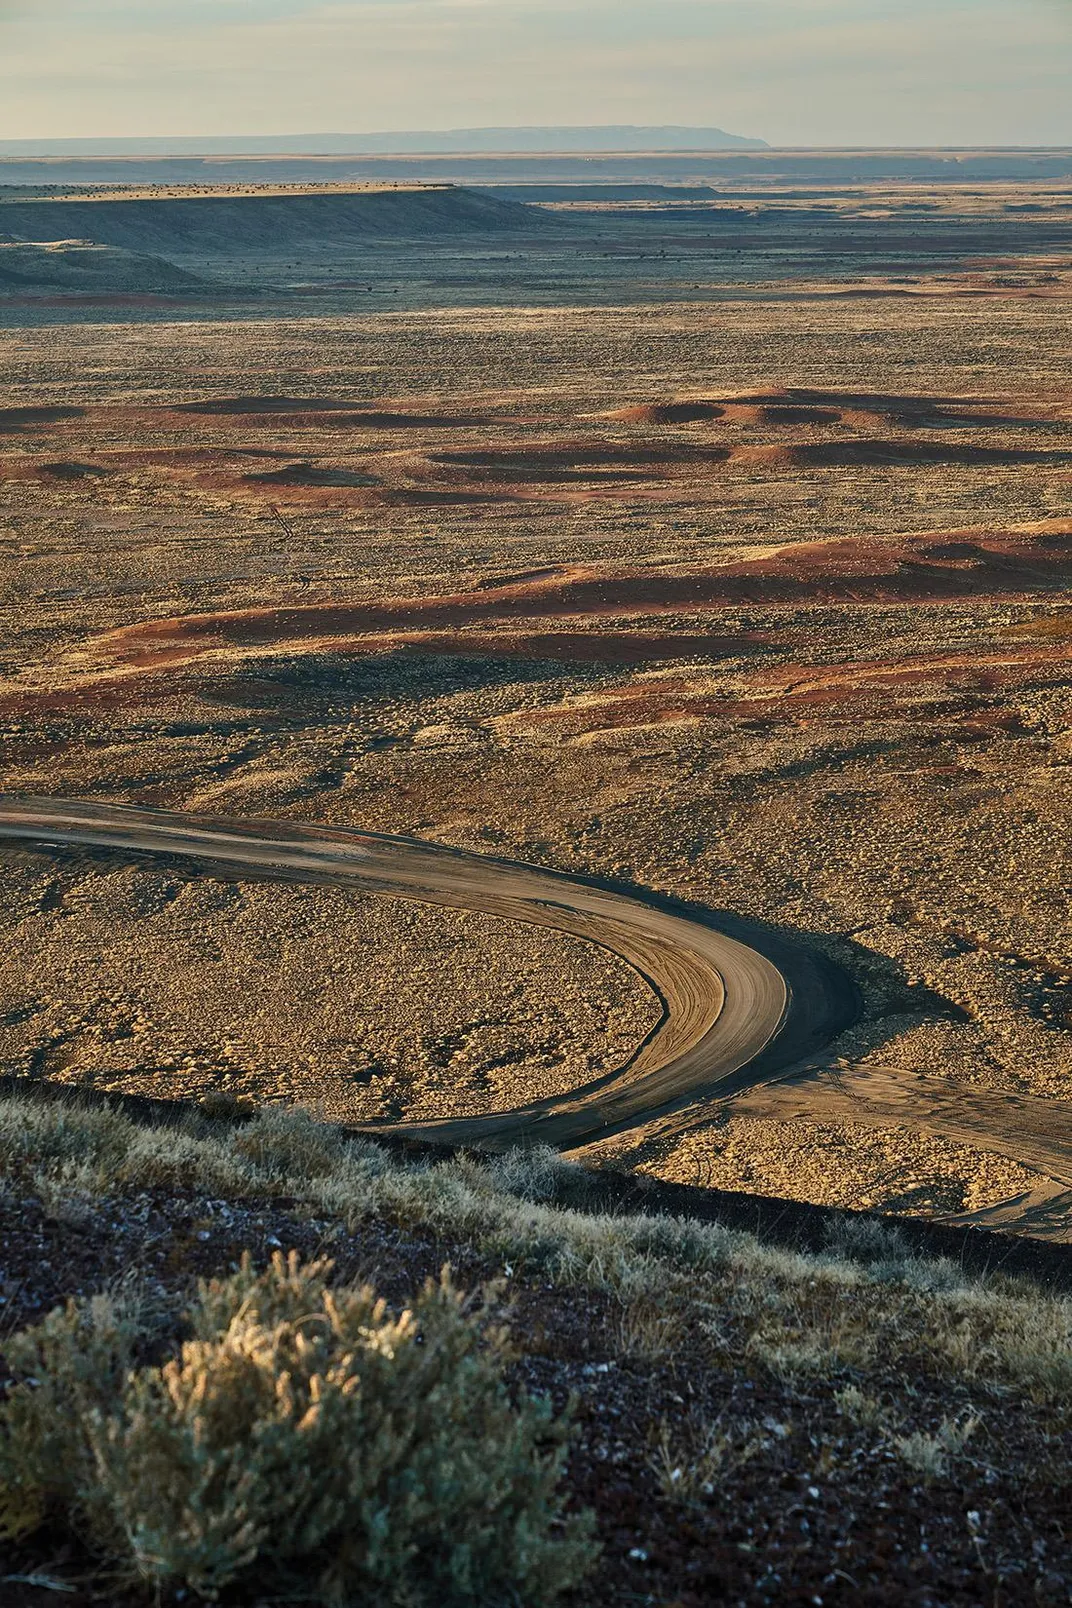 Arizona desert landscape with roads